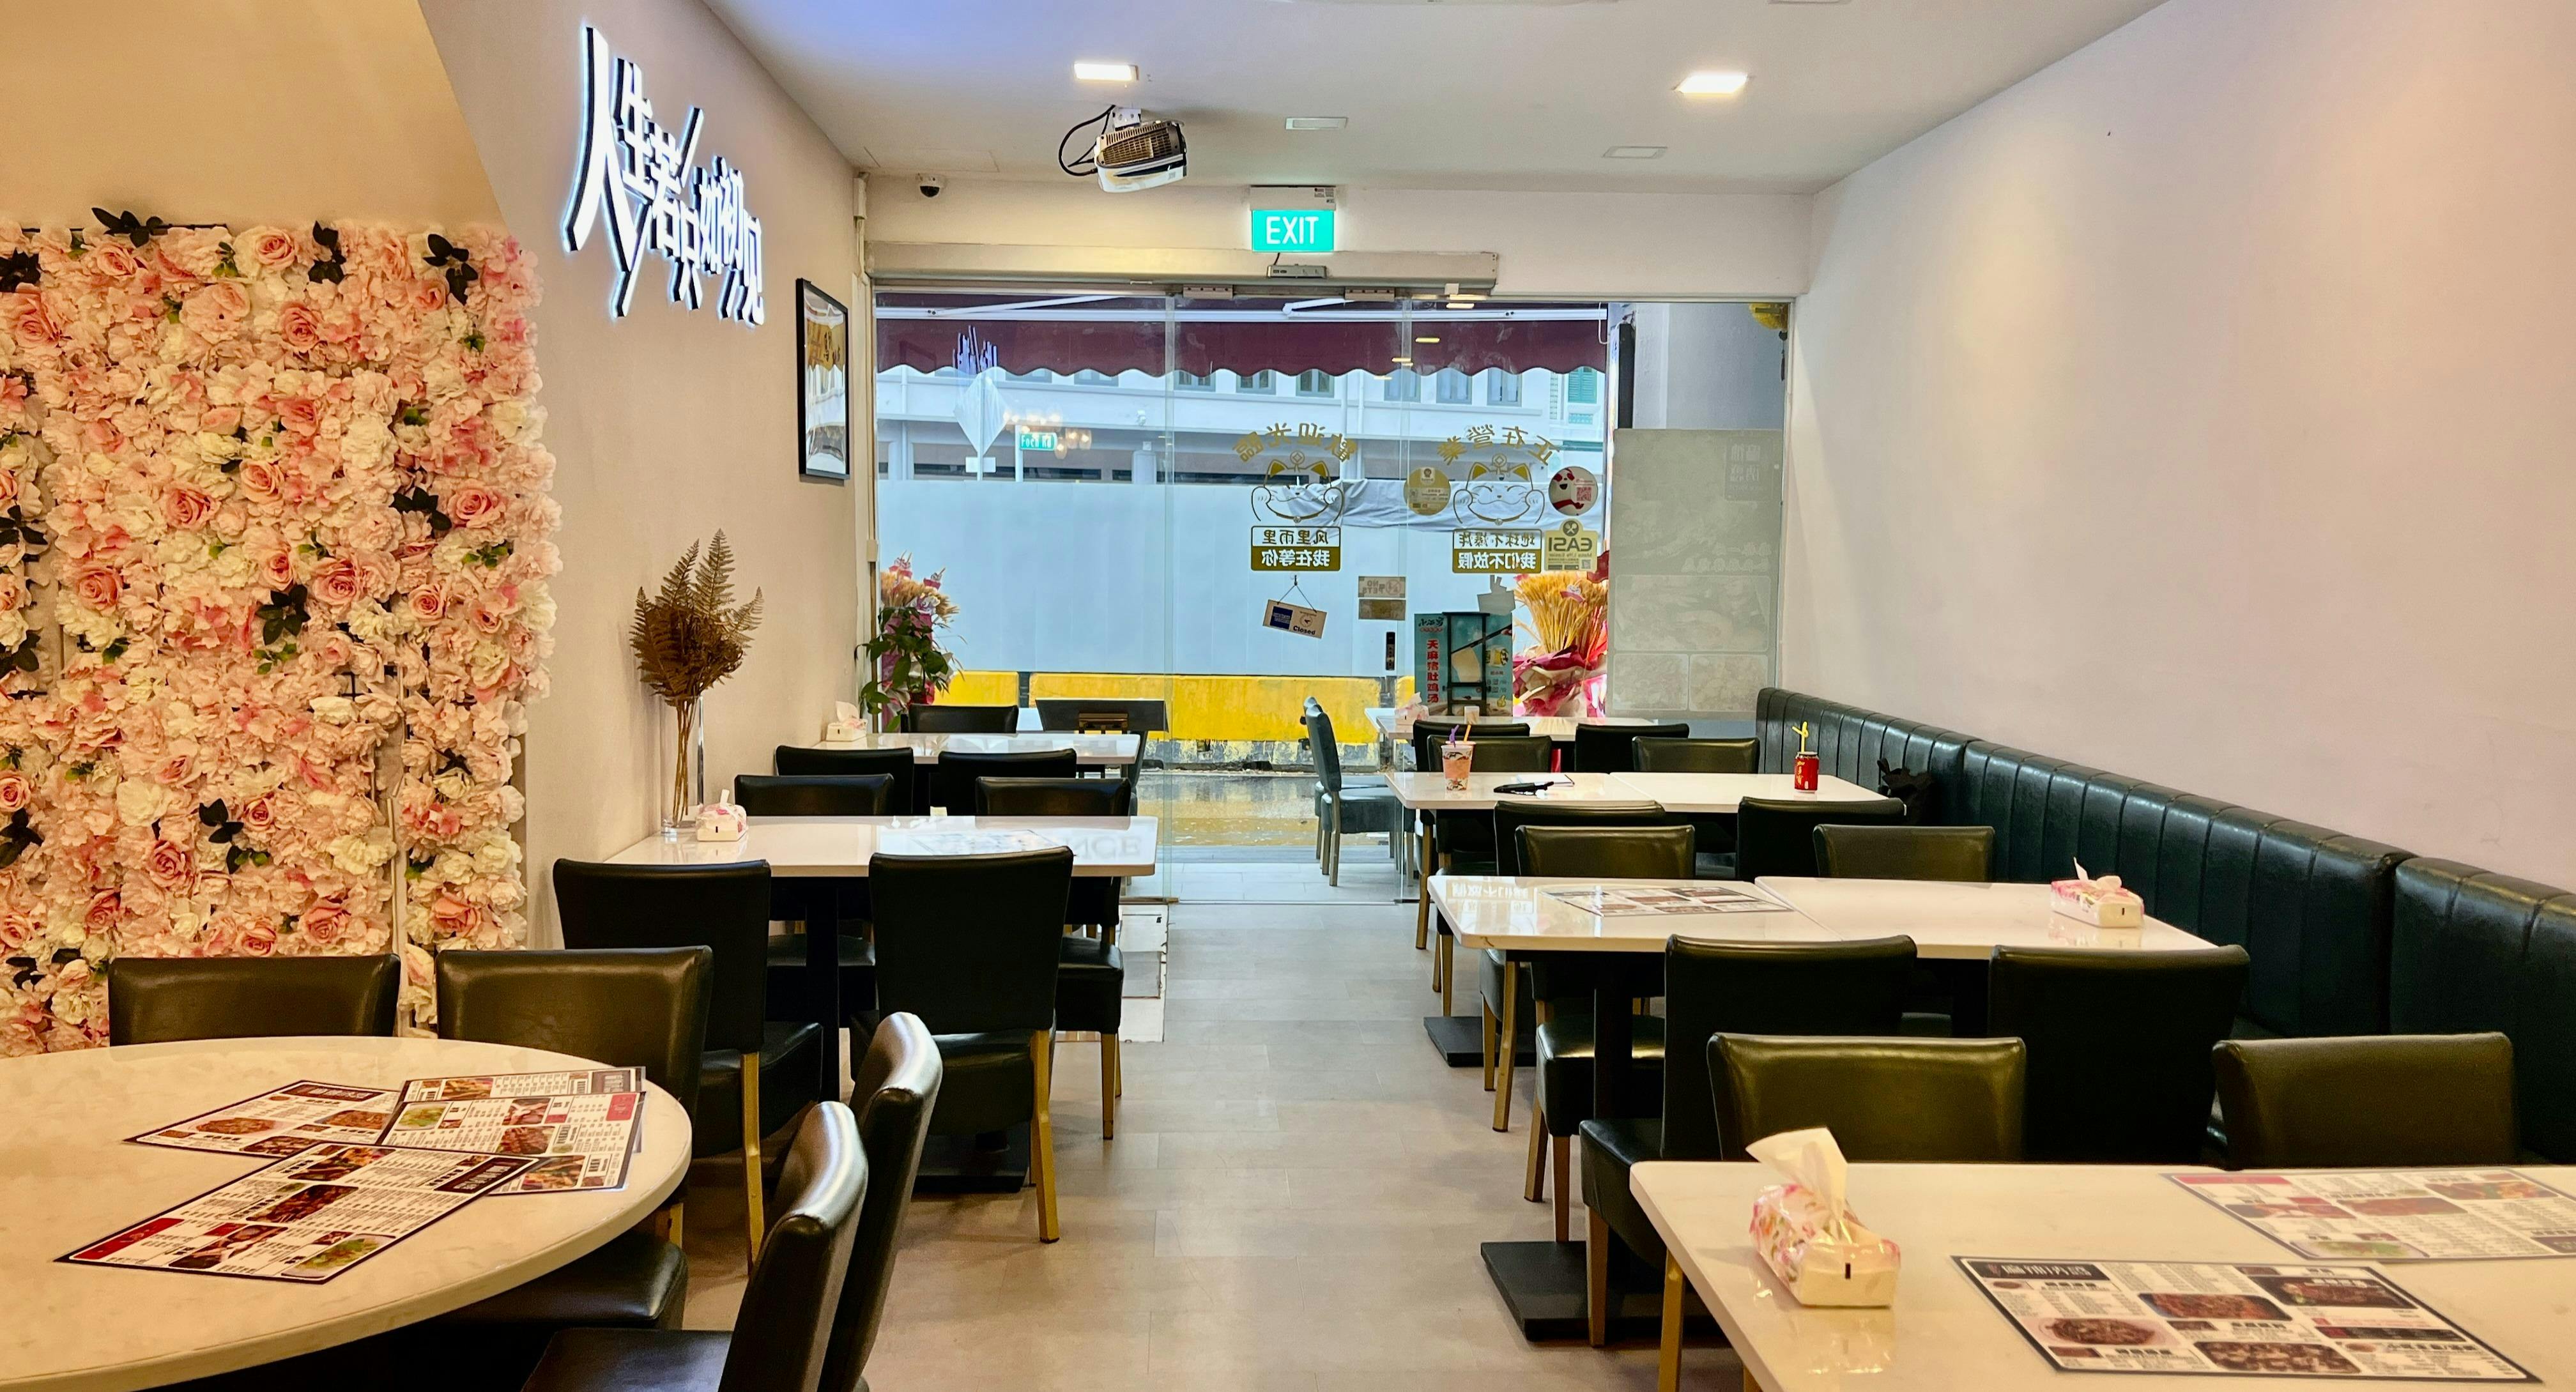 Photo of restaurant Spice Spirit 麻辣诱惑 in Jalan Besar, Singapore